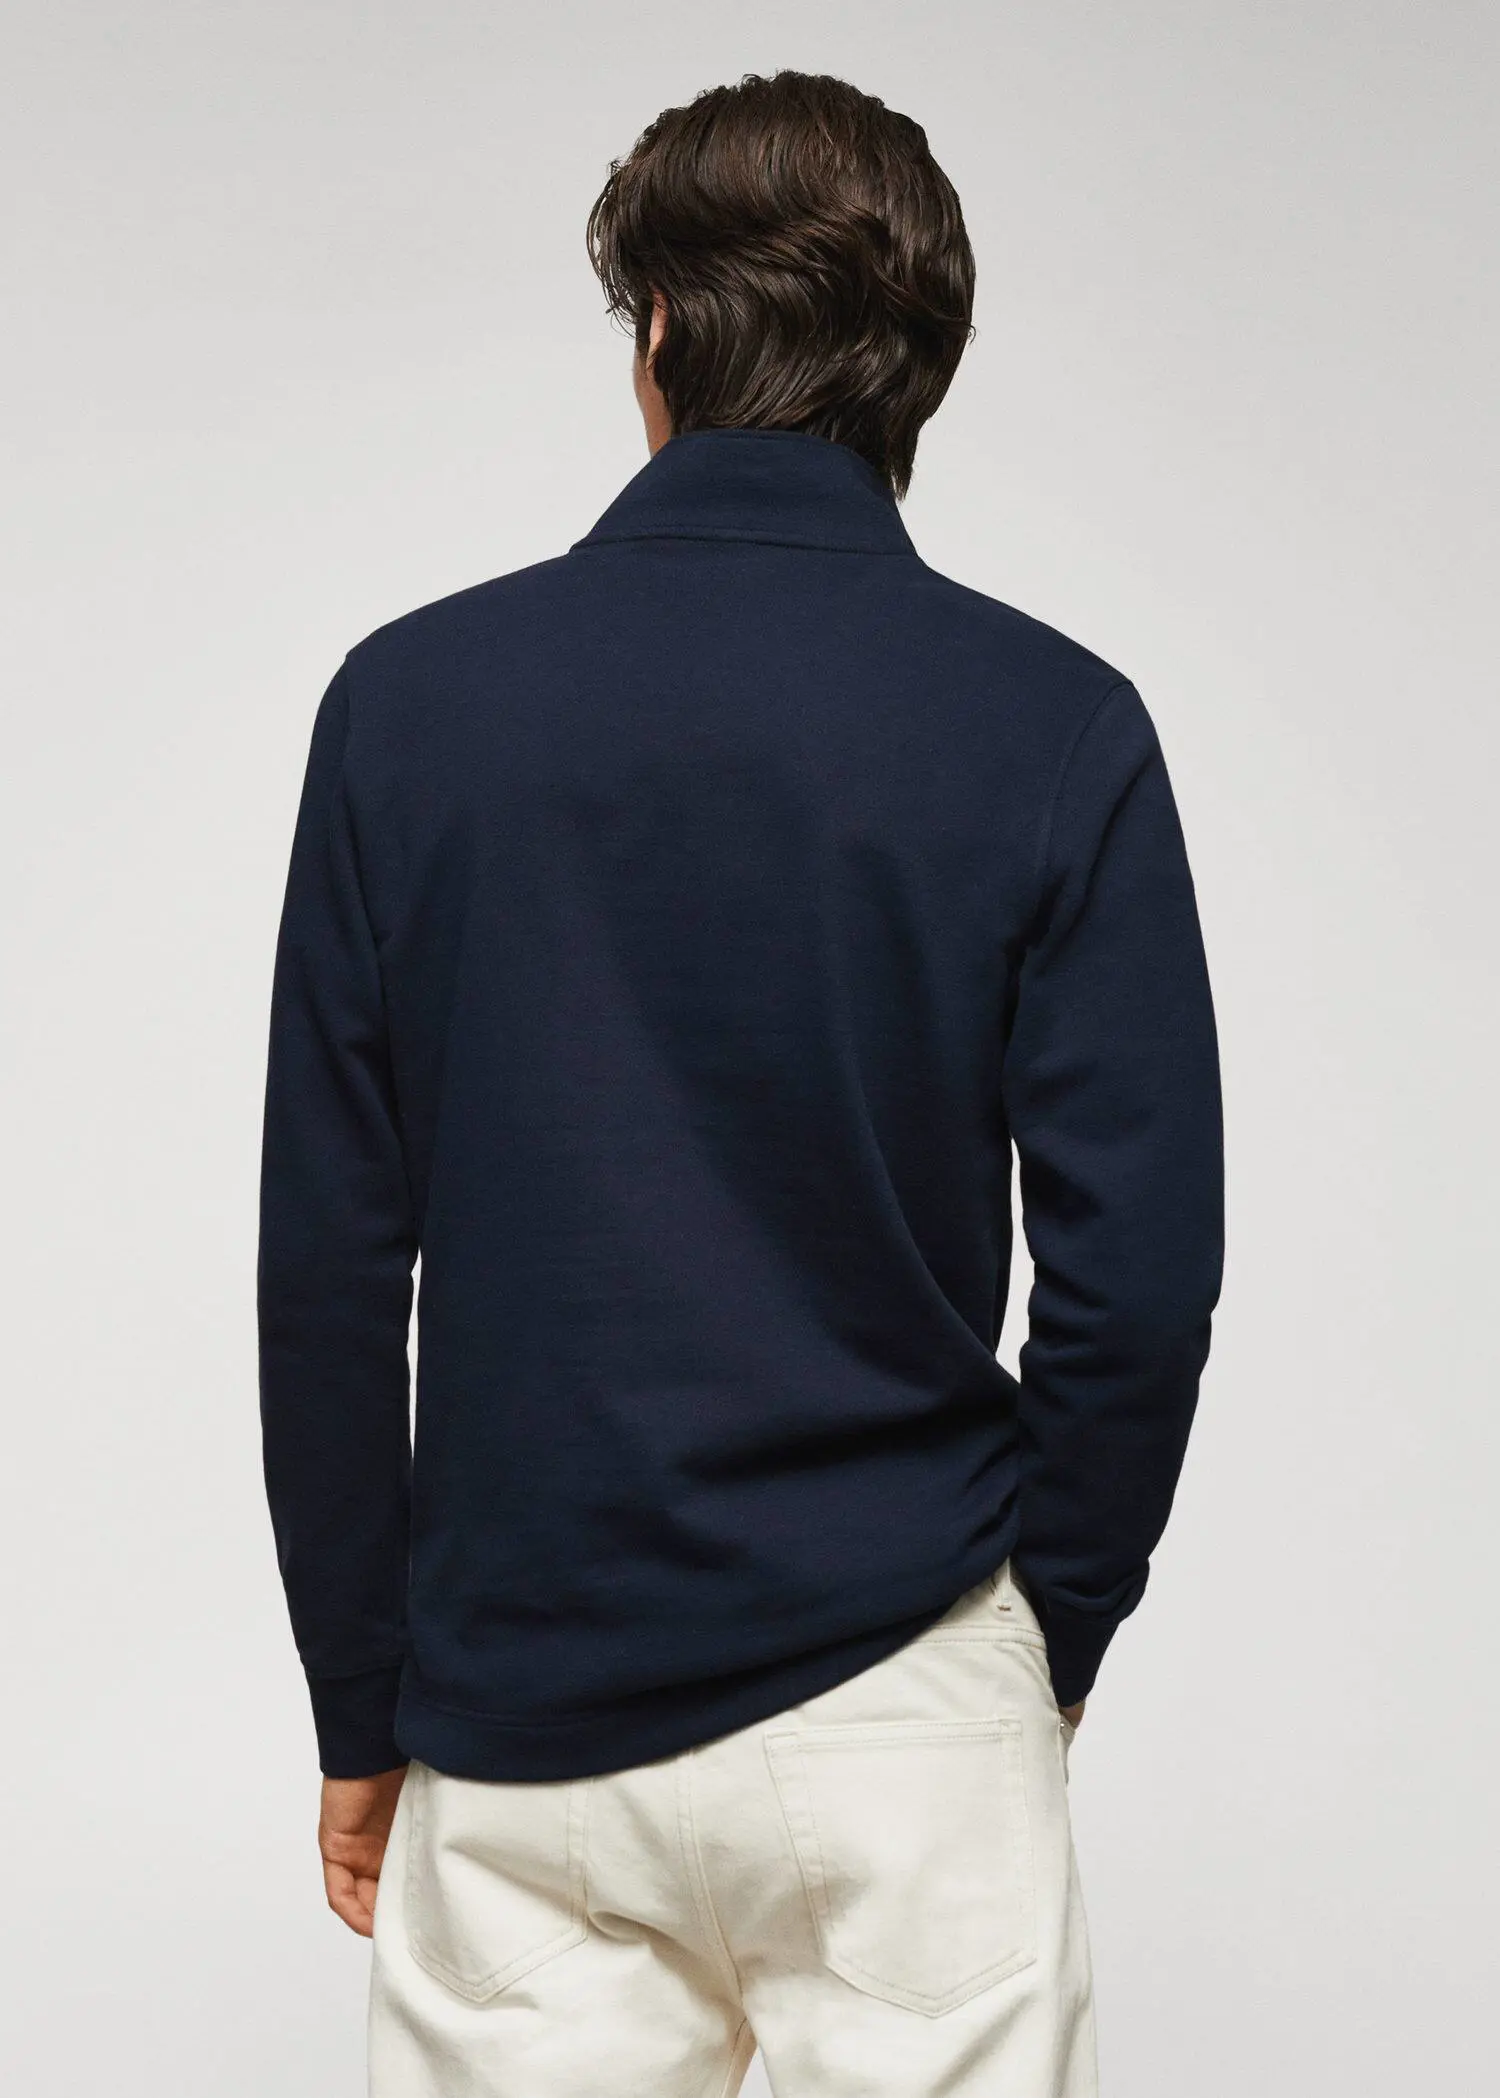 Mango Cotton sweatshirt with zipper neck. a man wearing a navy blue jacket and white pants. 